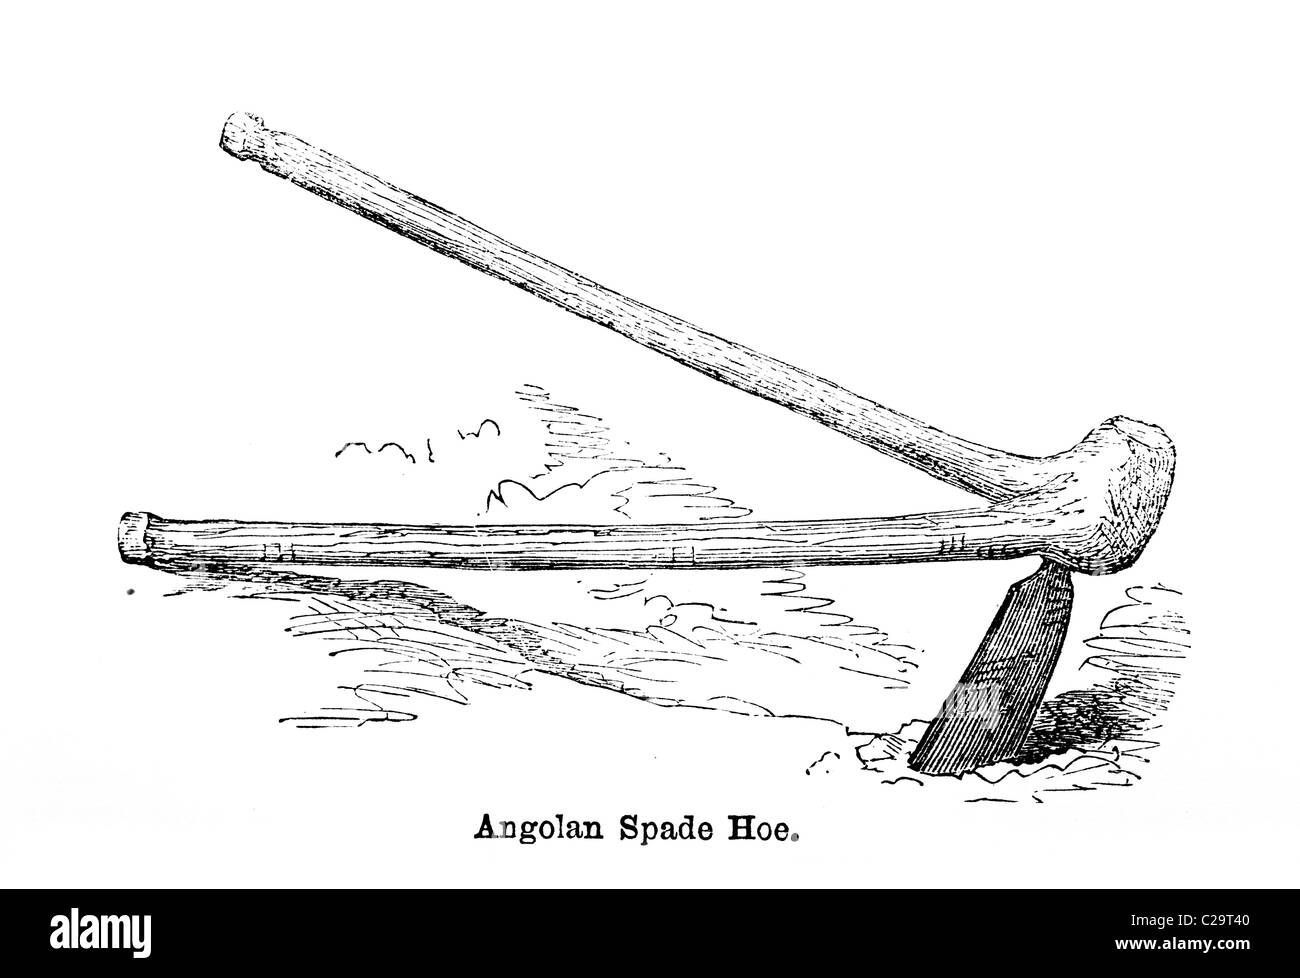 Angolan Spade Hoe, 19th century illustration Stock Photo